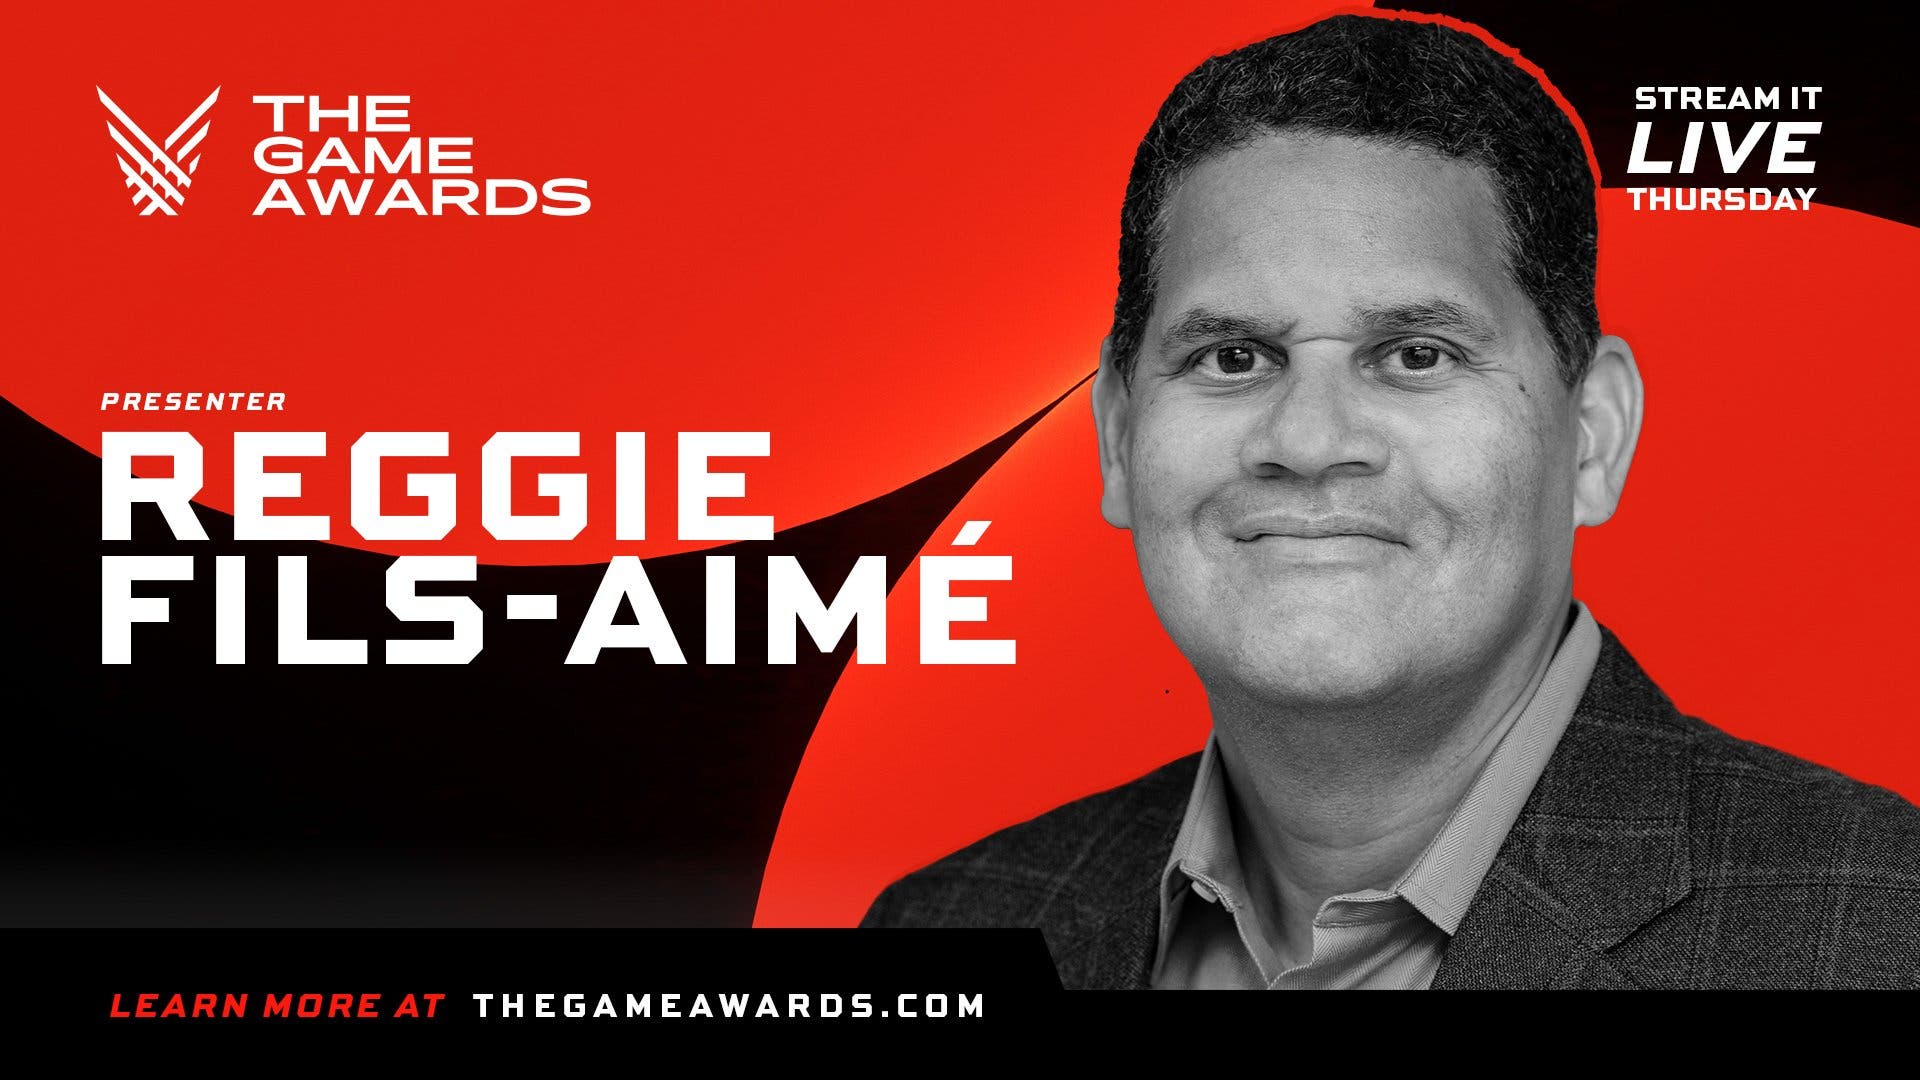 Reggie Fils-Aime queda confirmado como presentador de los Game Awards 2020